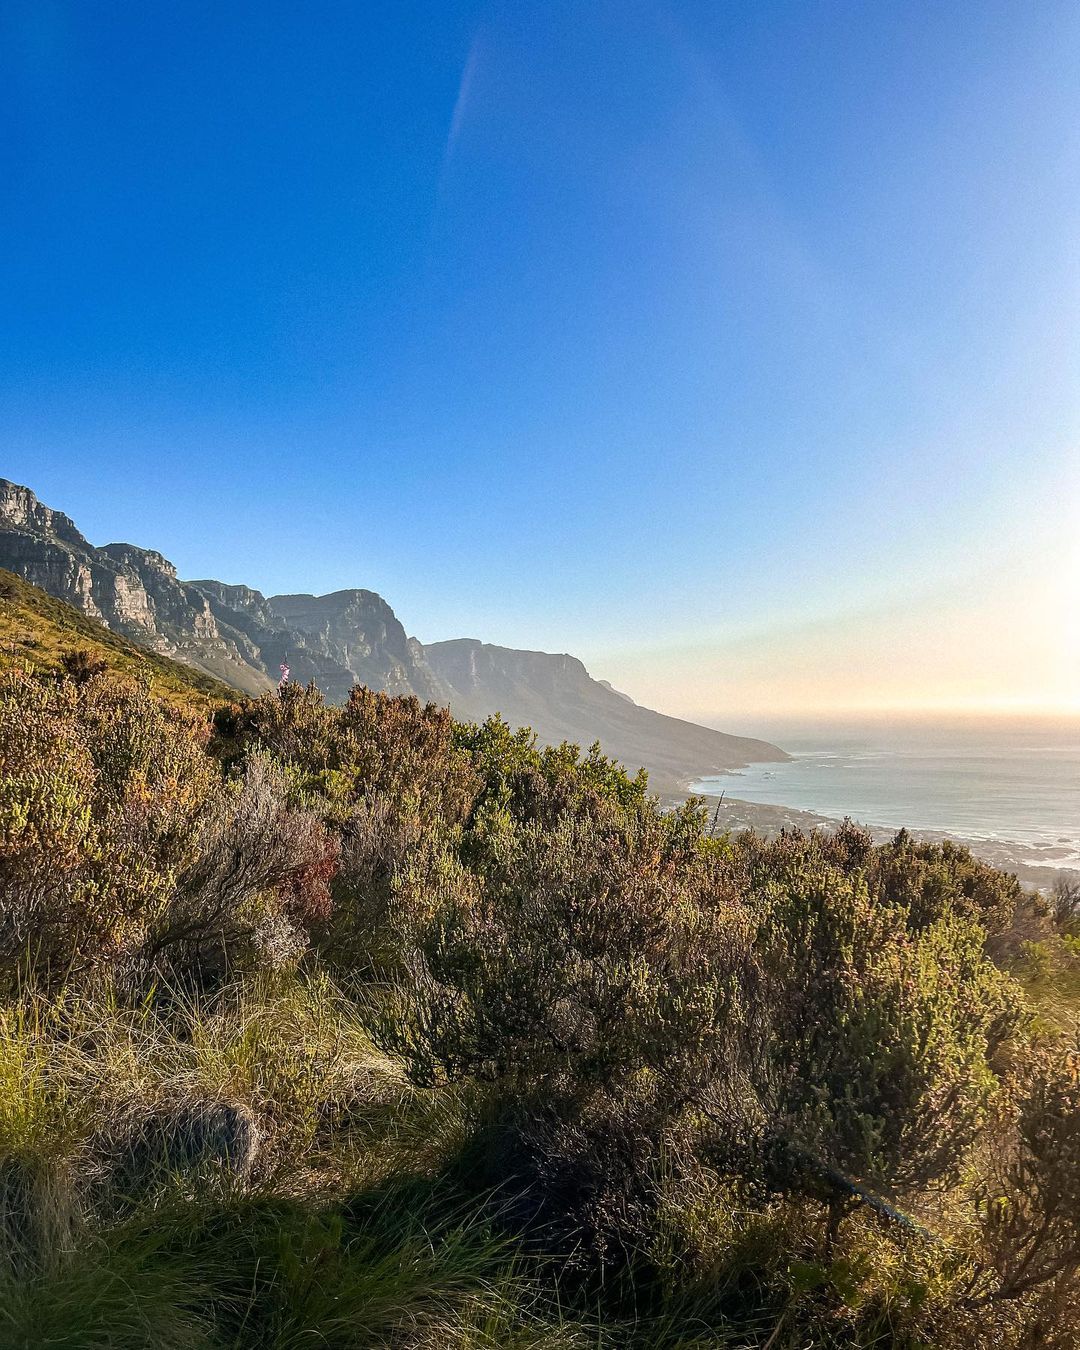 Lacherelle de ultieme reisgids voor Kaapstad Zuid-Afrika